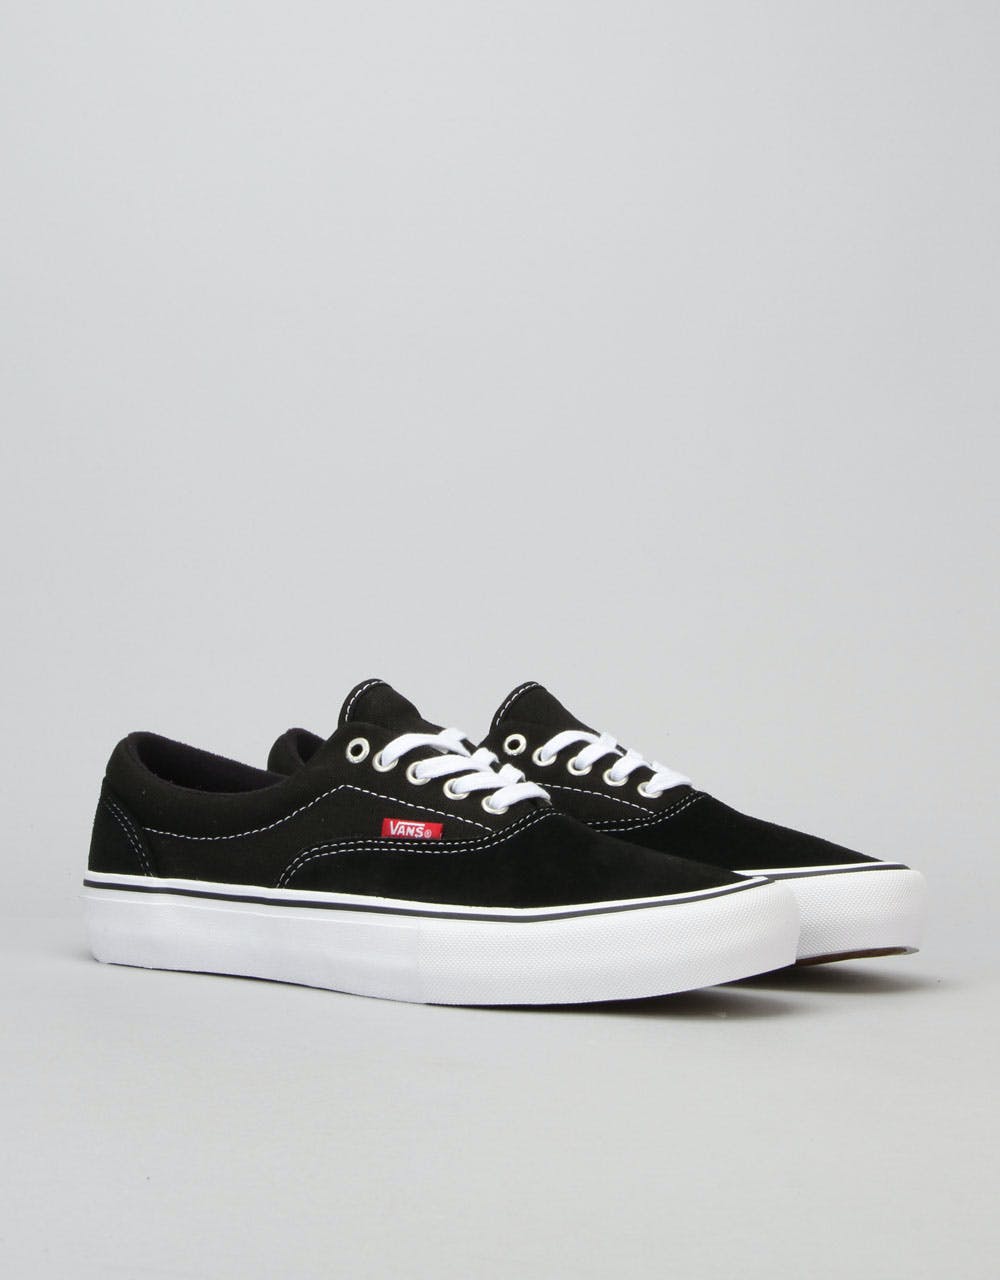 Vans Era Pro Skate Shoes - Black/White/Gum